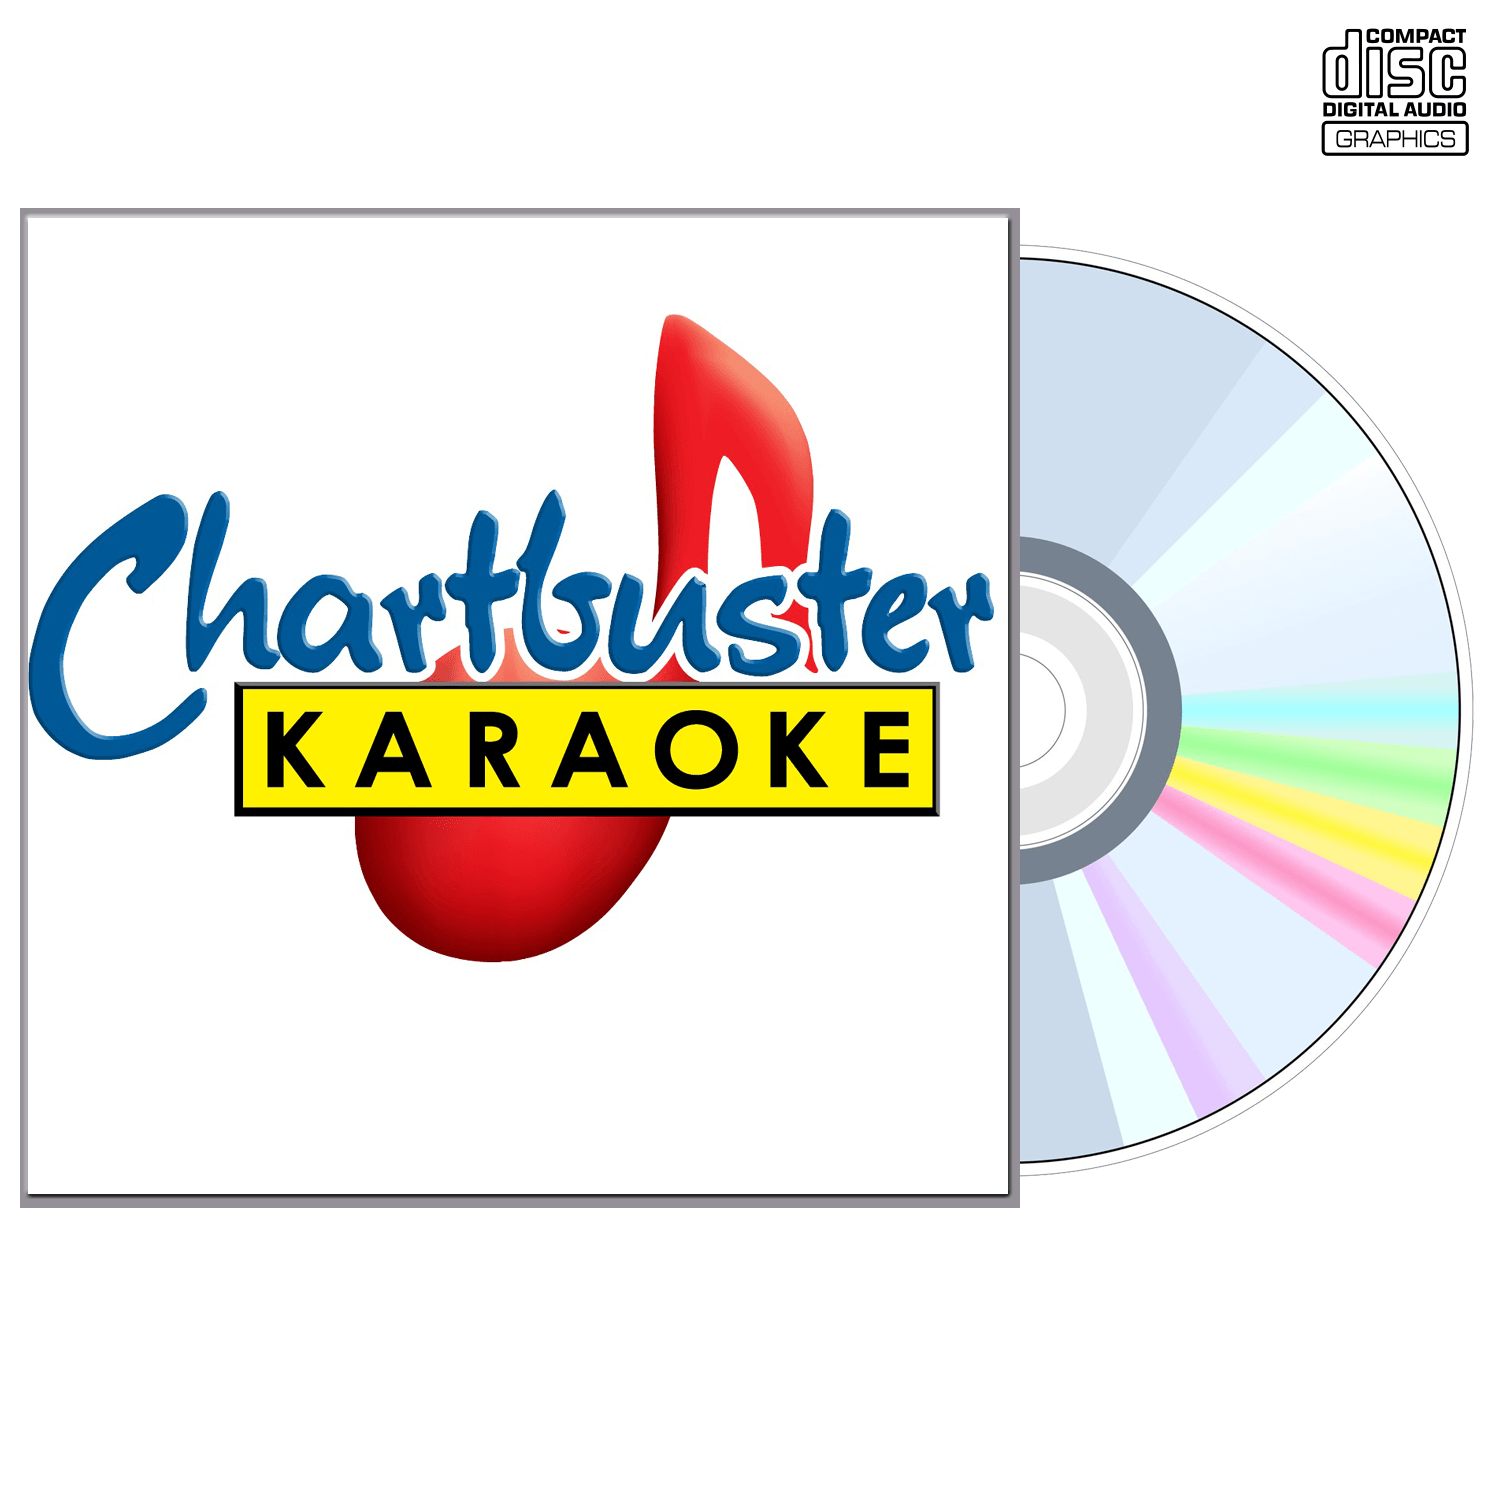 Tom Jones - CD+G - Chartbuster Karaoke - Karaoke Home Entertainment